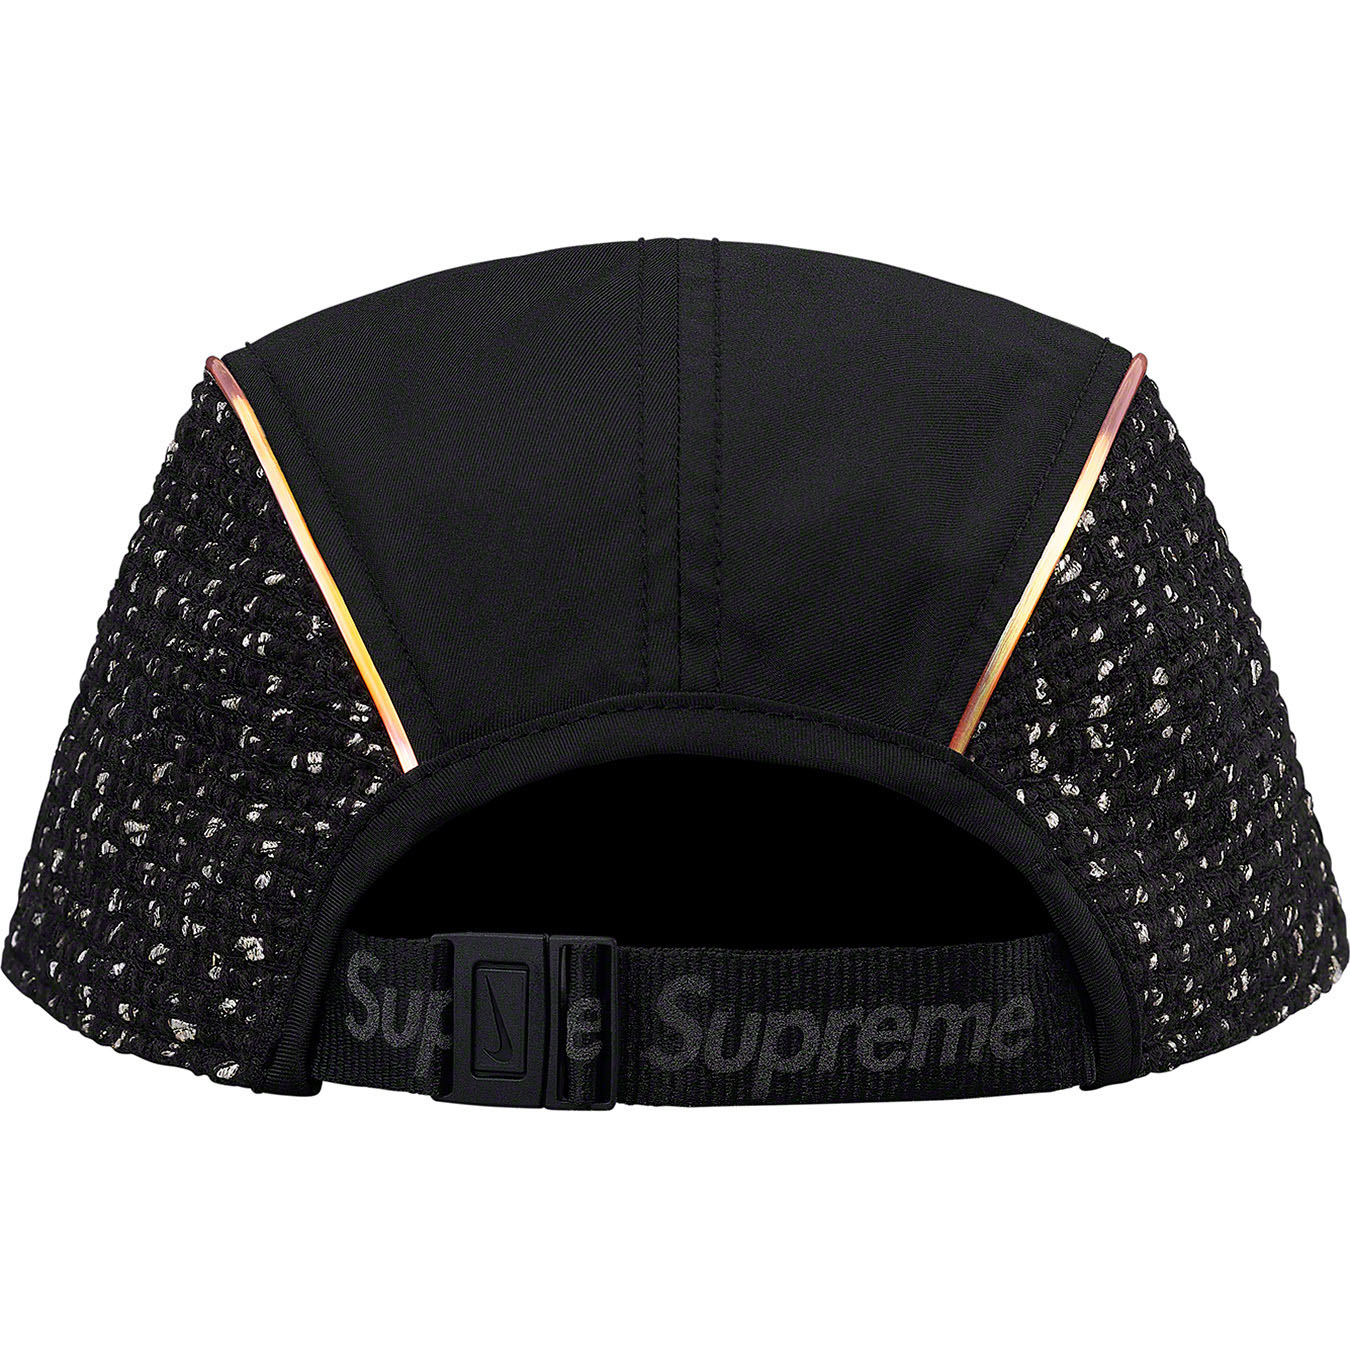 Supreme®/Nike® Bouclé Running Hat